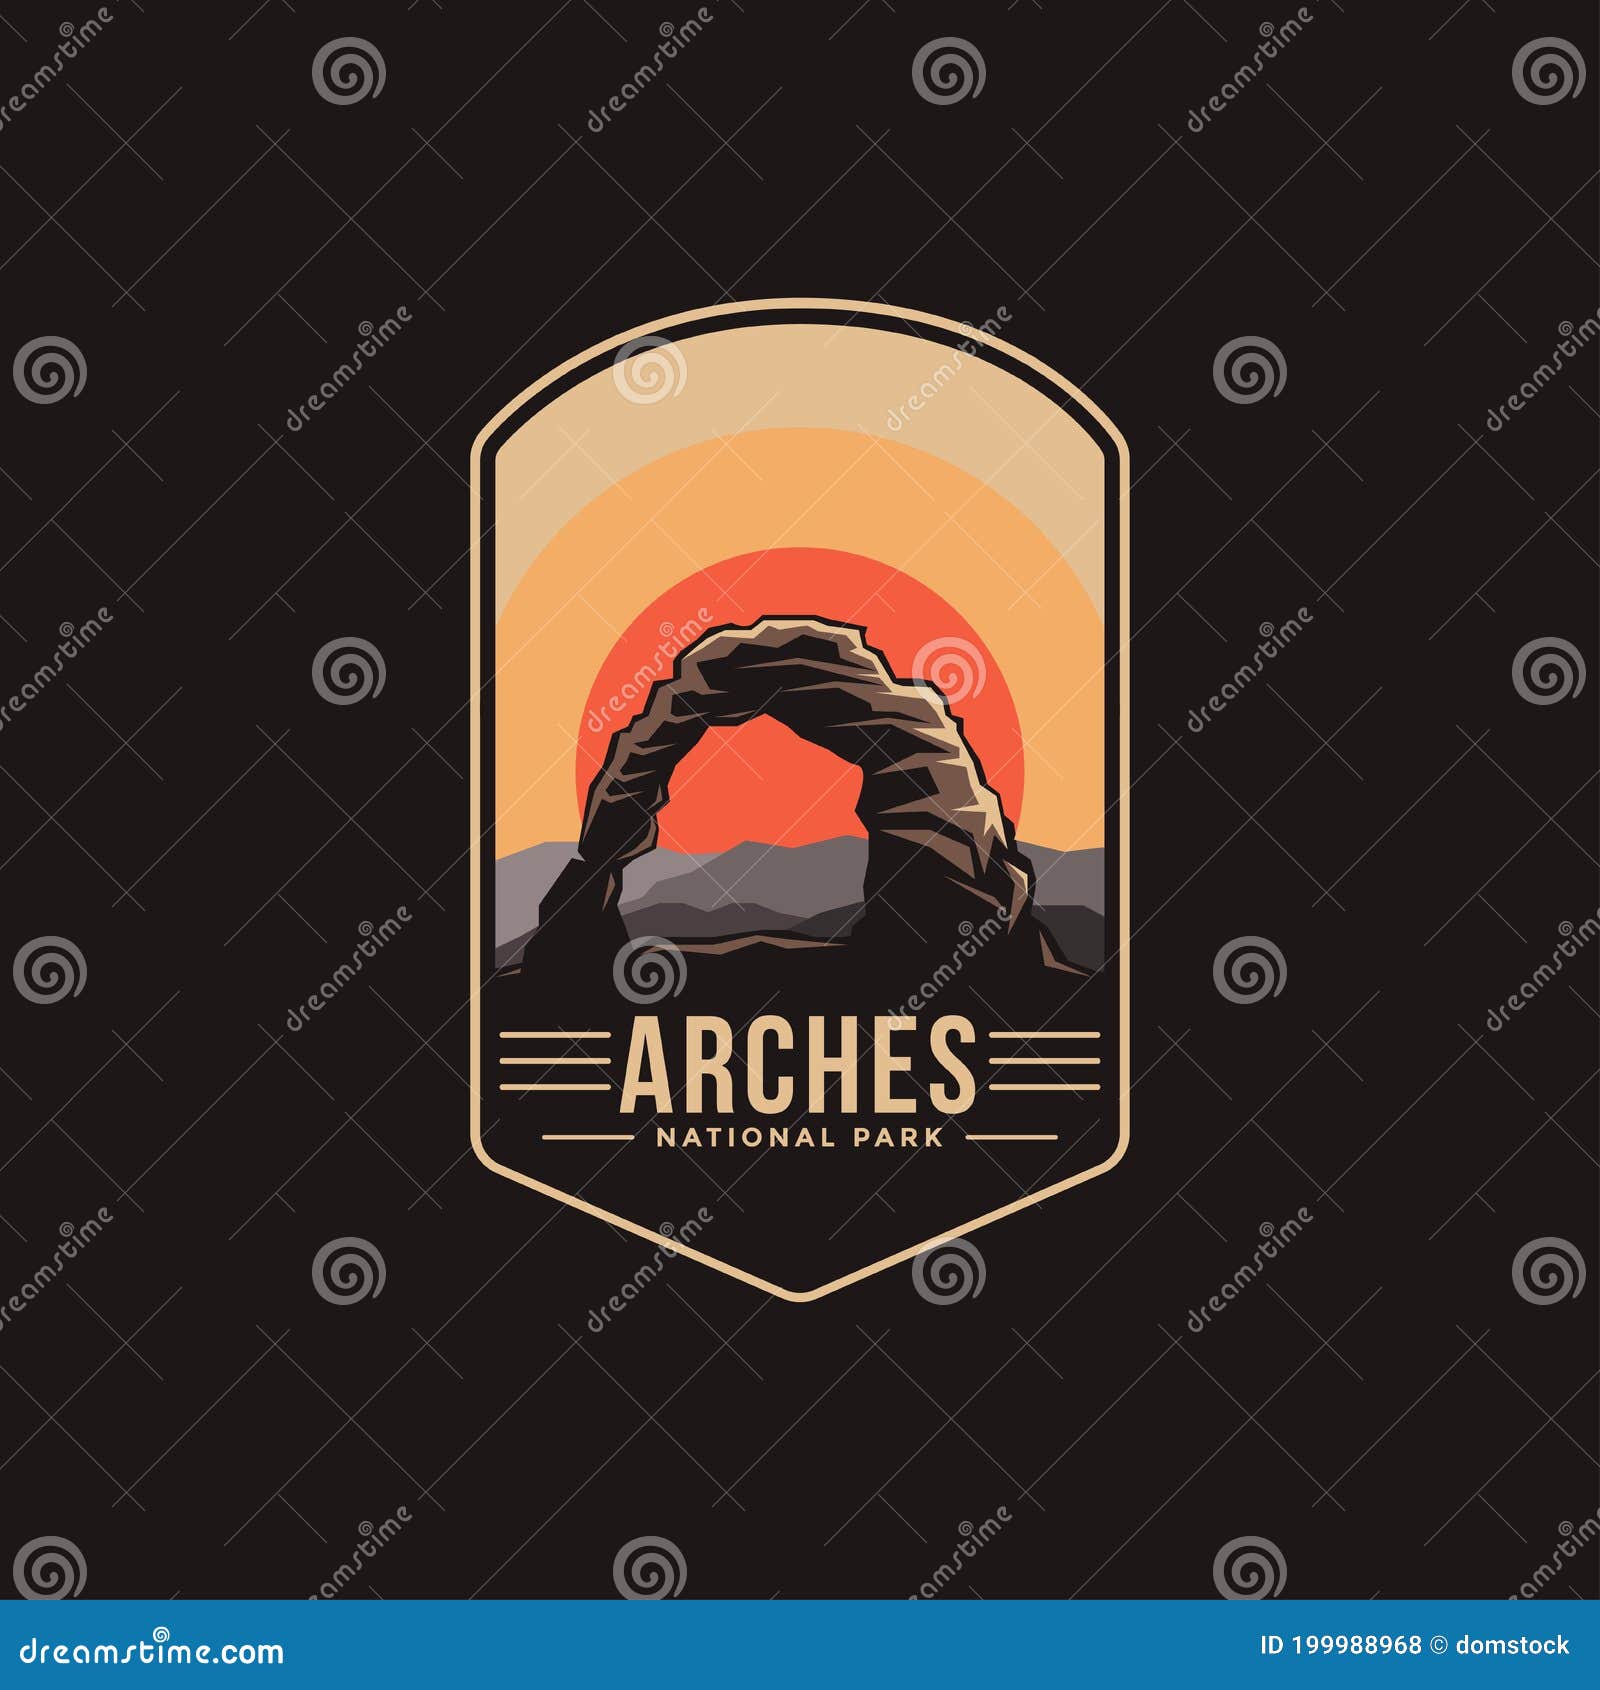 emblem patch logo  of arches national park